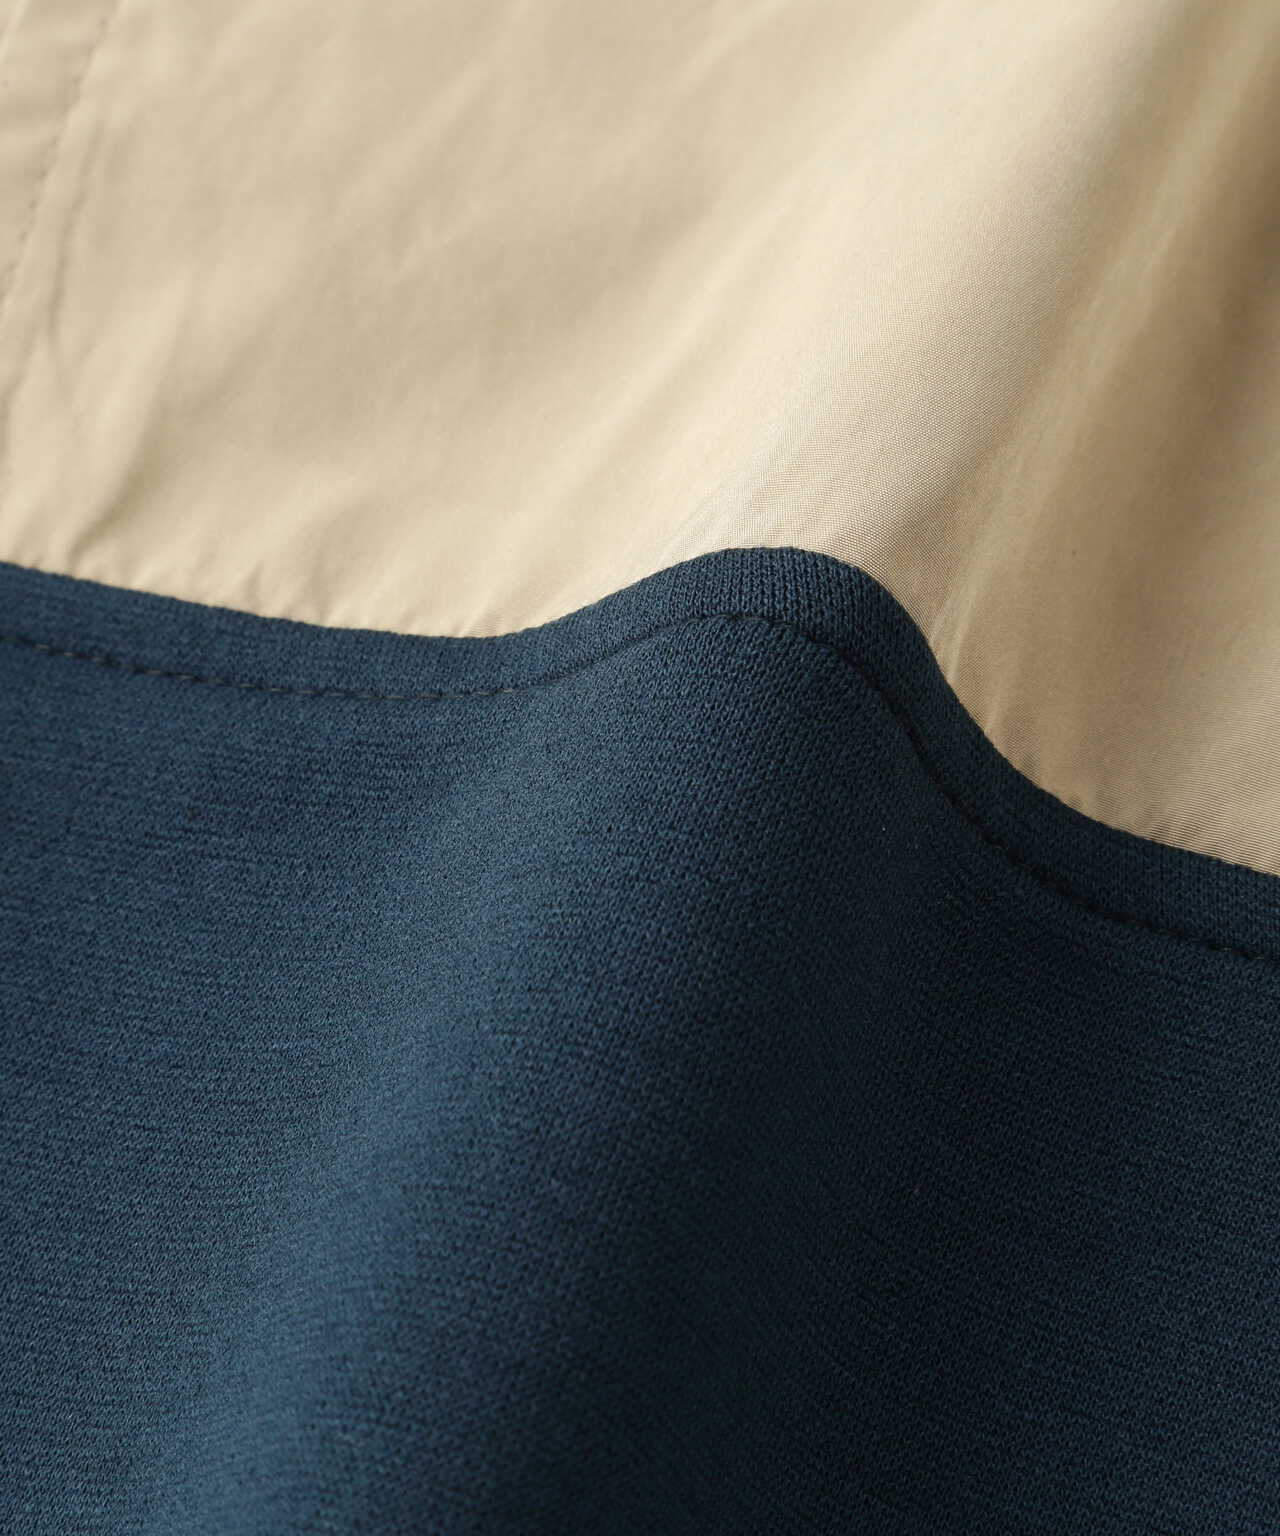 CULLNI/クルニ/Trench Detail Shirt Blocking Tee/トレンチシャツ/23